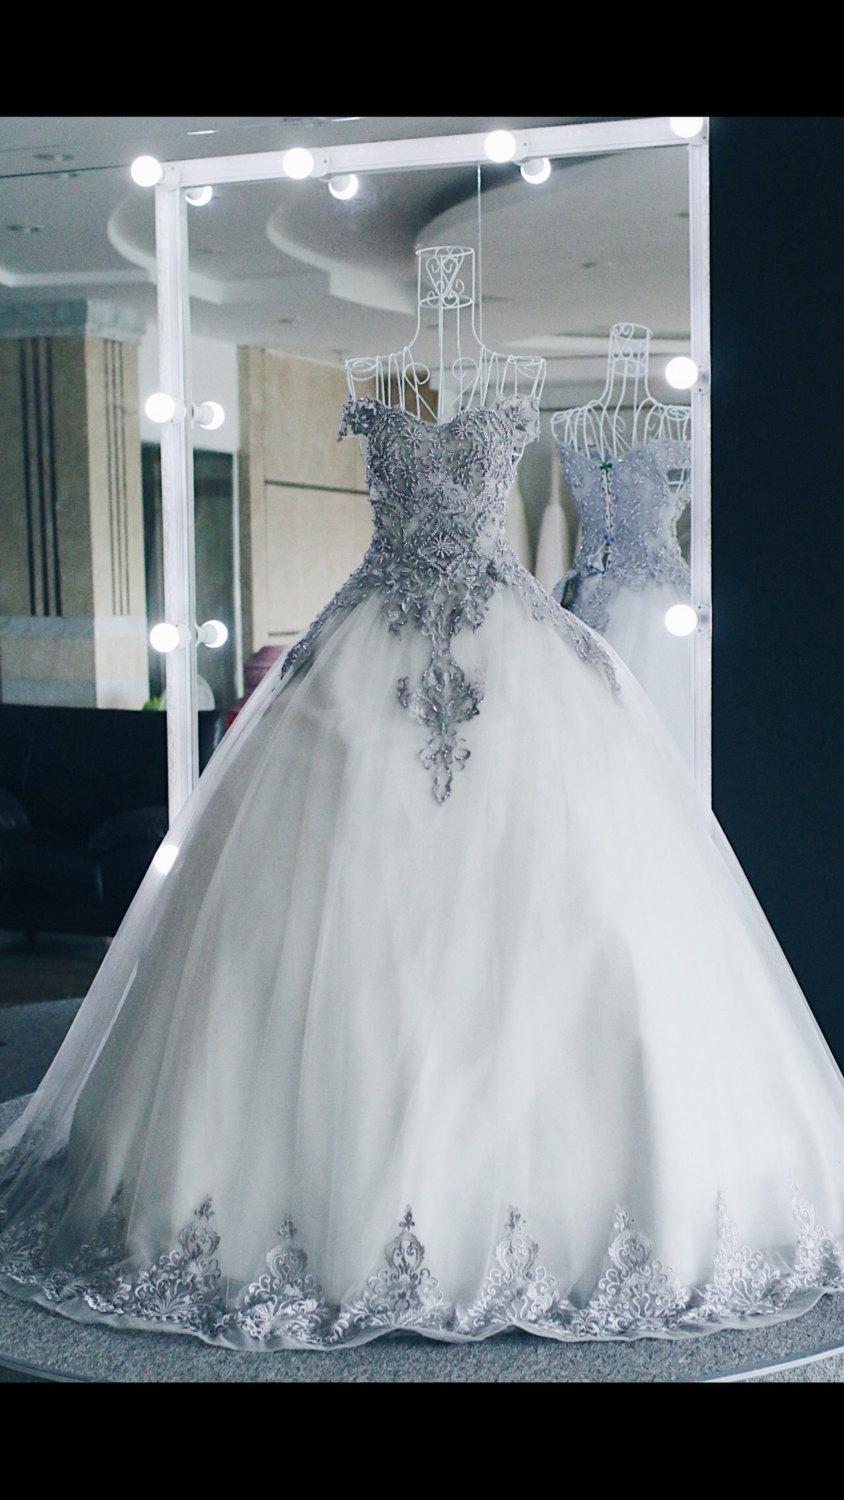 زفاف - RAINNY / Wedding gown / Prom dress / Gown